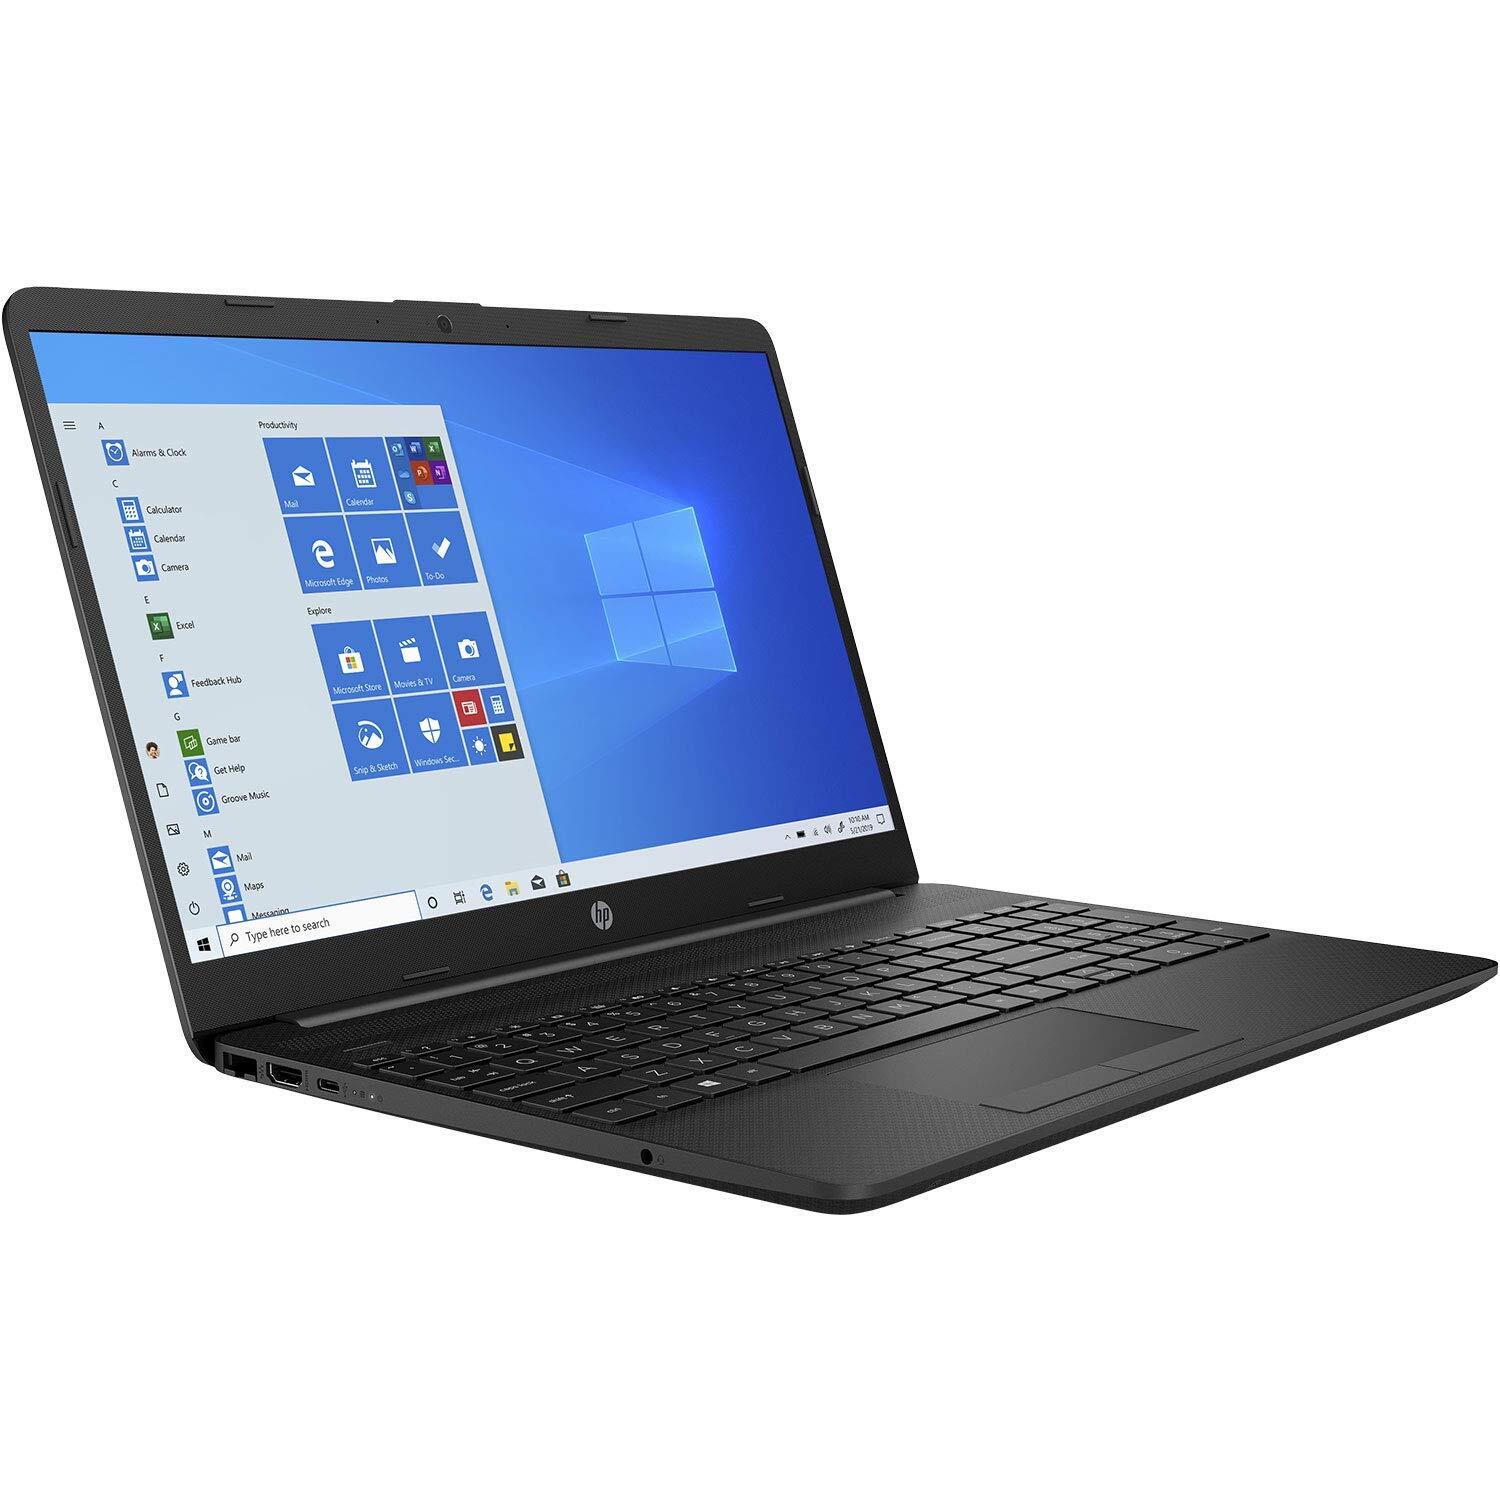 HP 15s-du2071TU 15.6-inch Laptop (10th Gen i3-1005G1/8GB/1TB HDD/Windows 10 Home/Integrated Graphics), Jet Black-M000000000530 www.mysocially.com